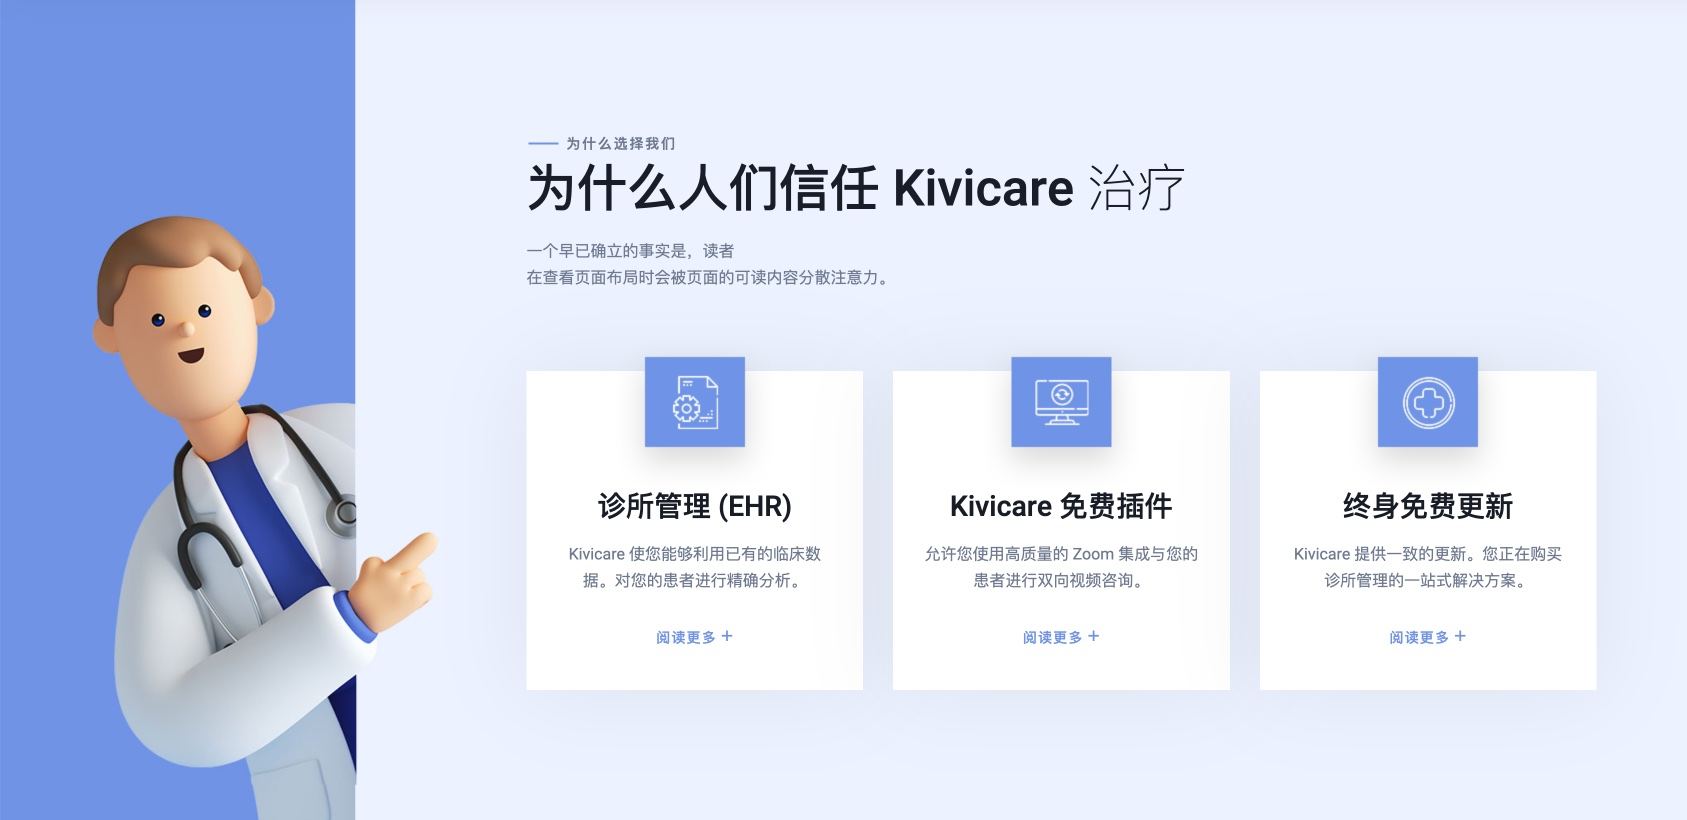 KiviCare-医疗诊所和患者管理WordPress主题[更至v2.0]